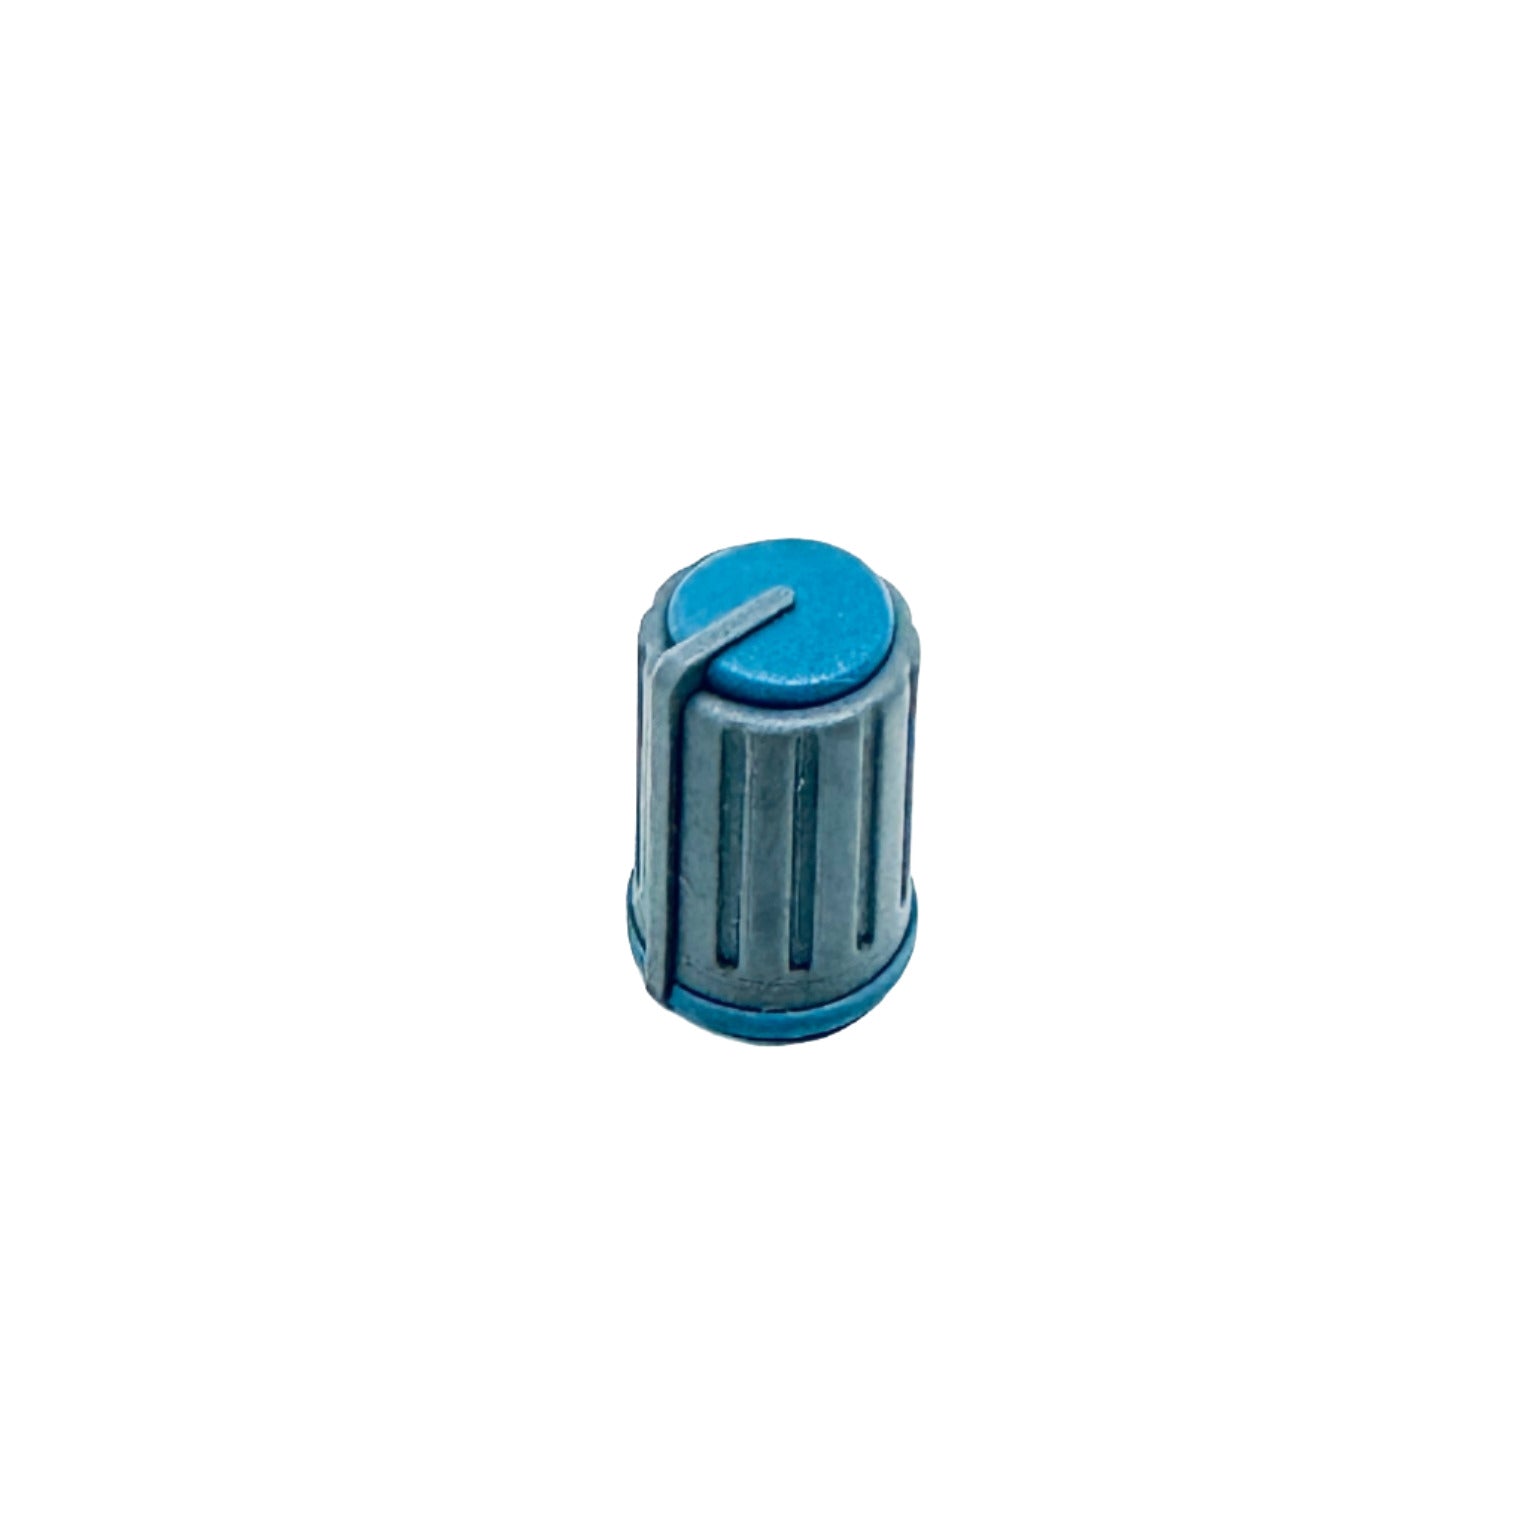 Peavey 30902237 Small Blue Knob